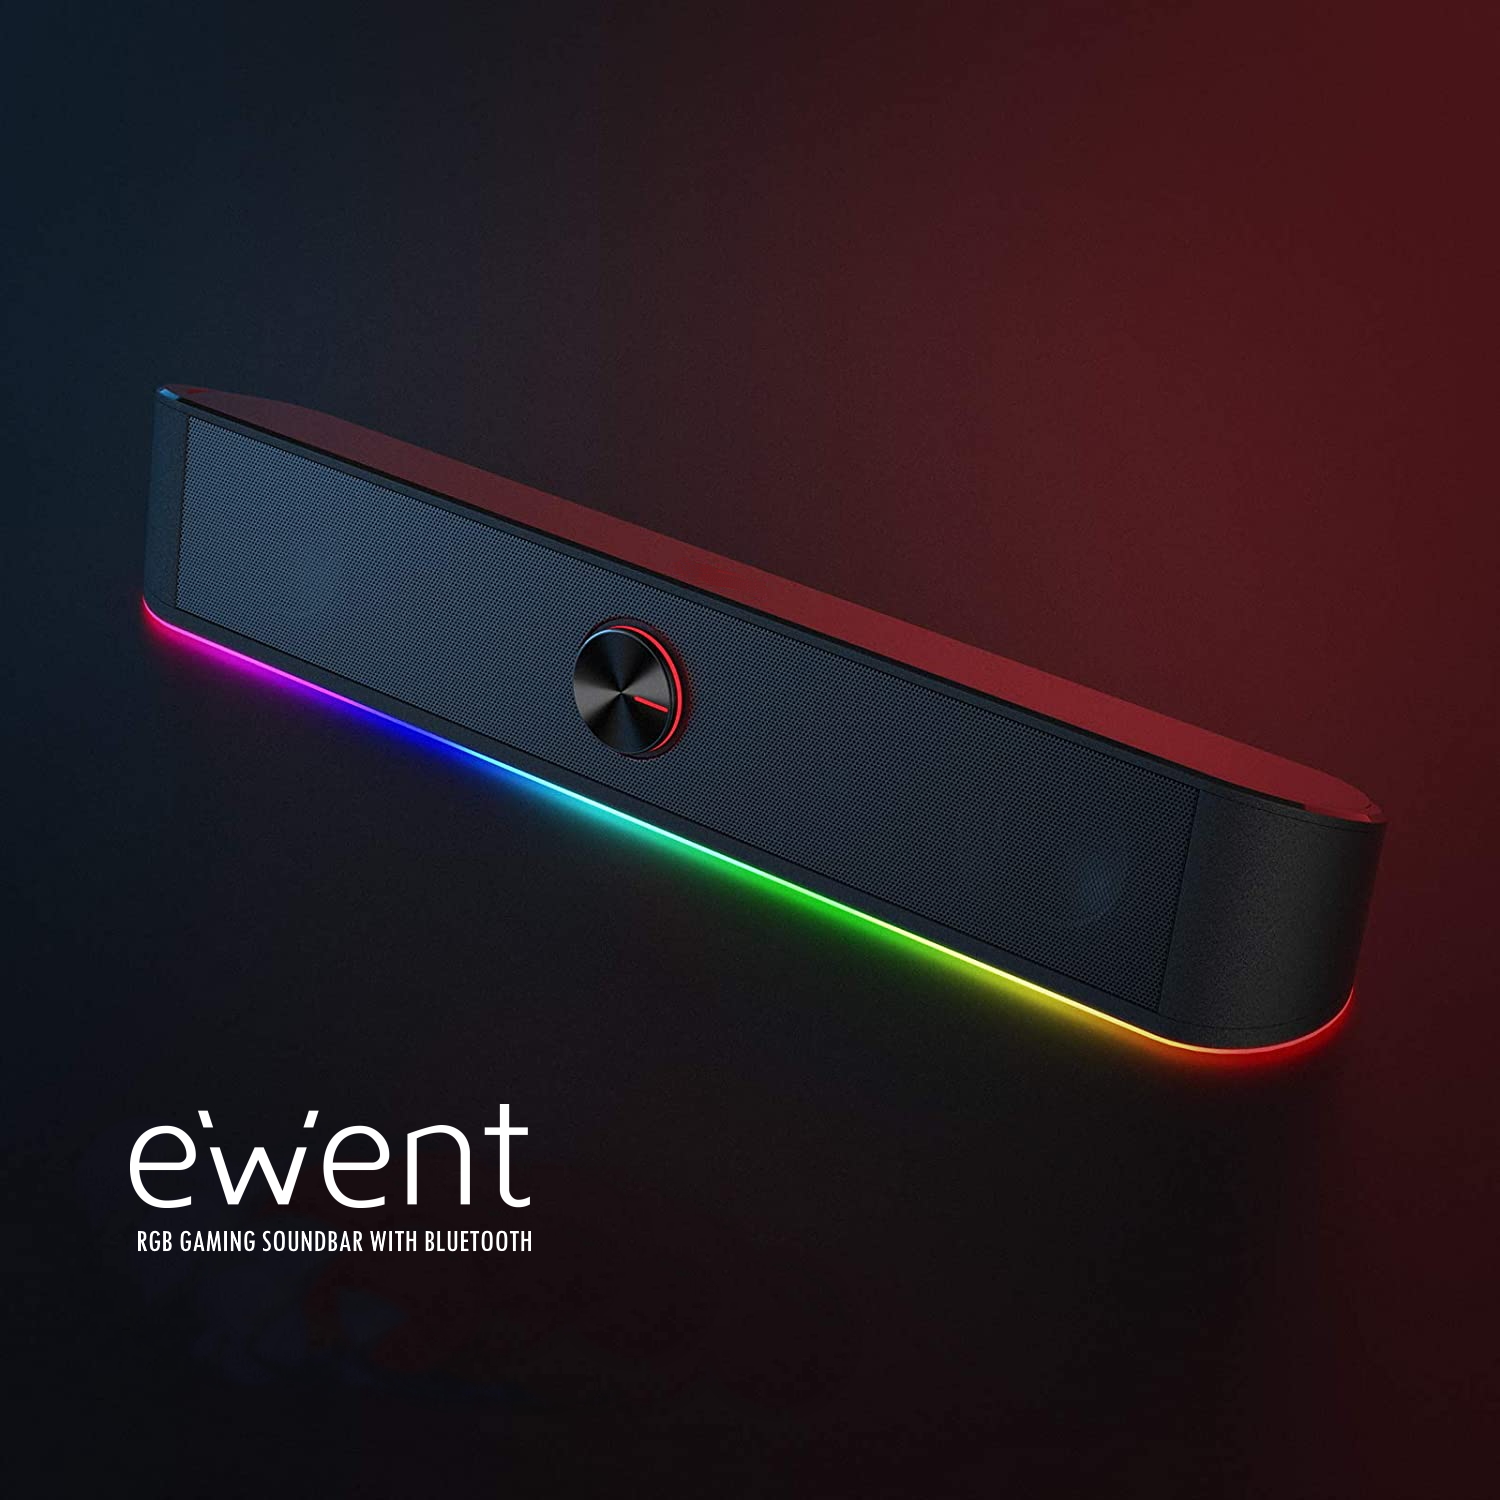 Barre de son Ewent RGB Gaming avec Bluetooth